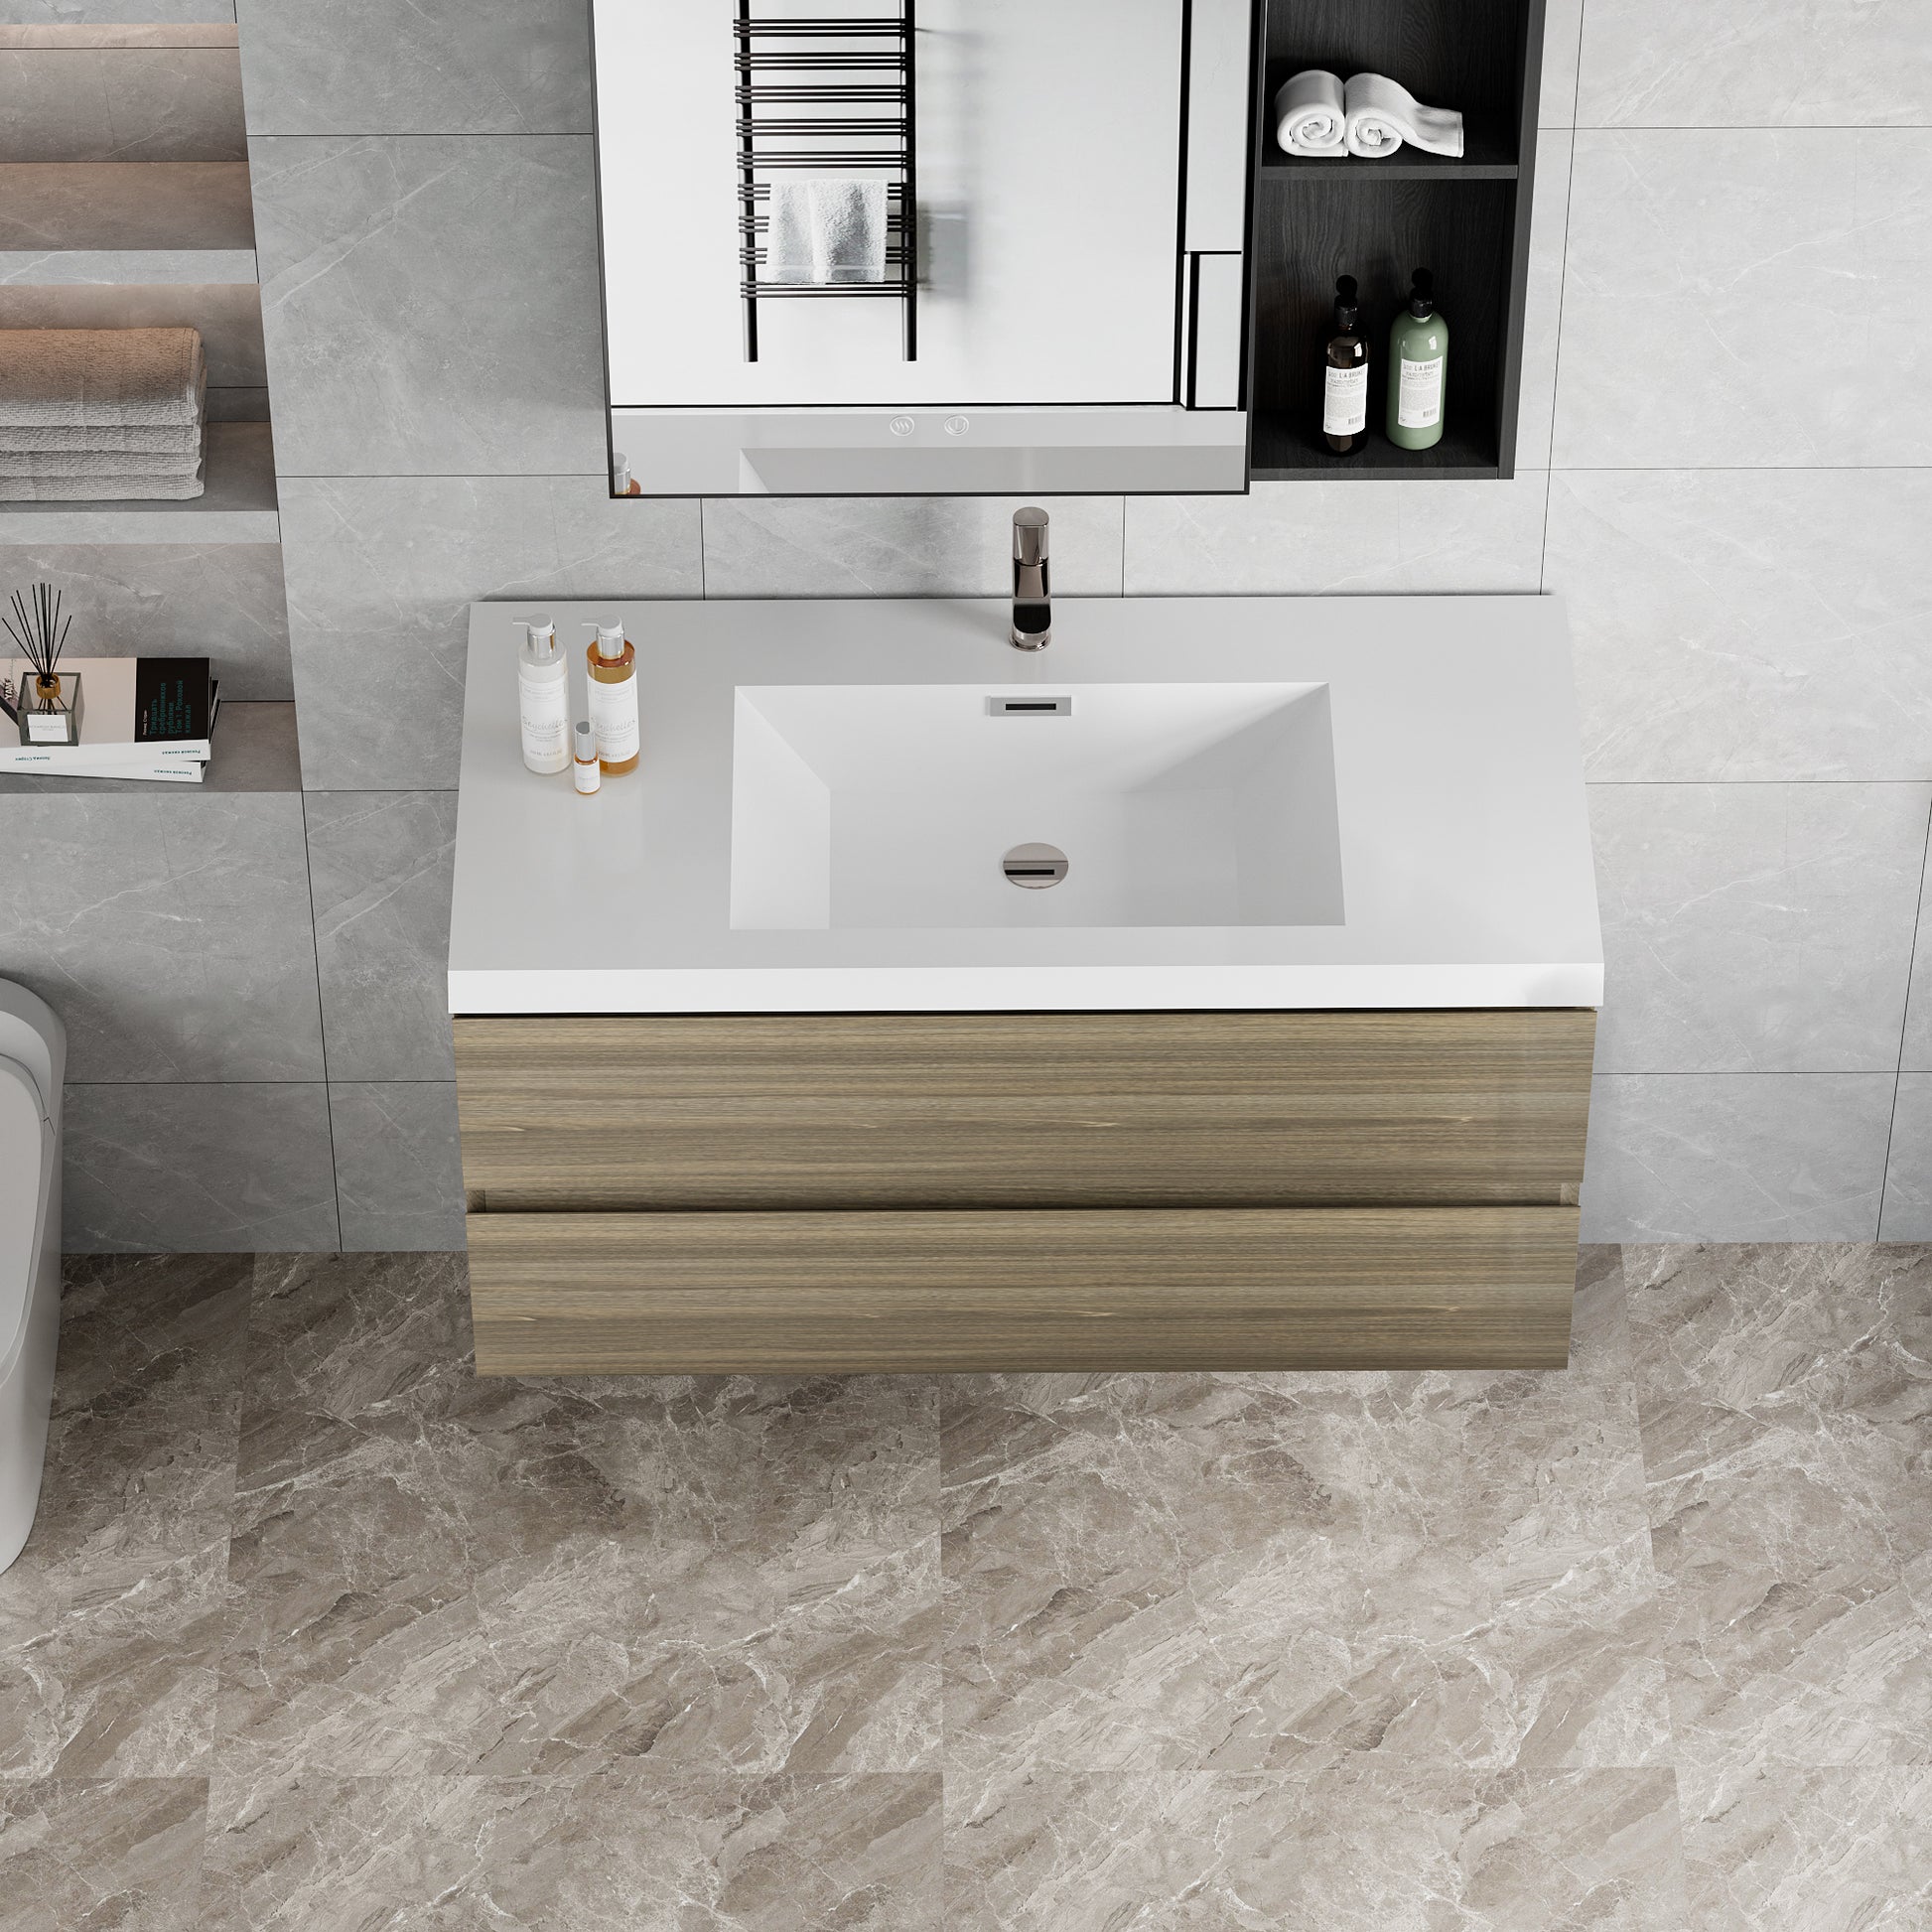 42" Floating Bathroom Vanity with Sink, Modern Wall 2-grey-bathroom-wall mounted-melamine